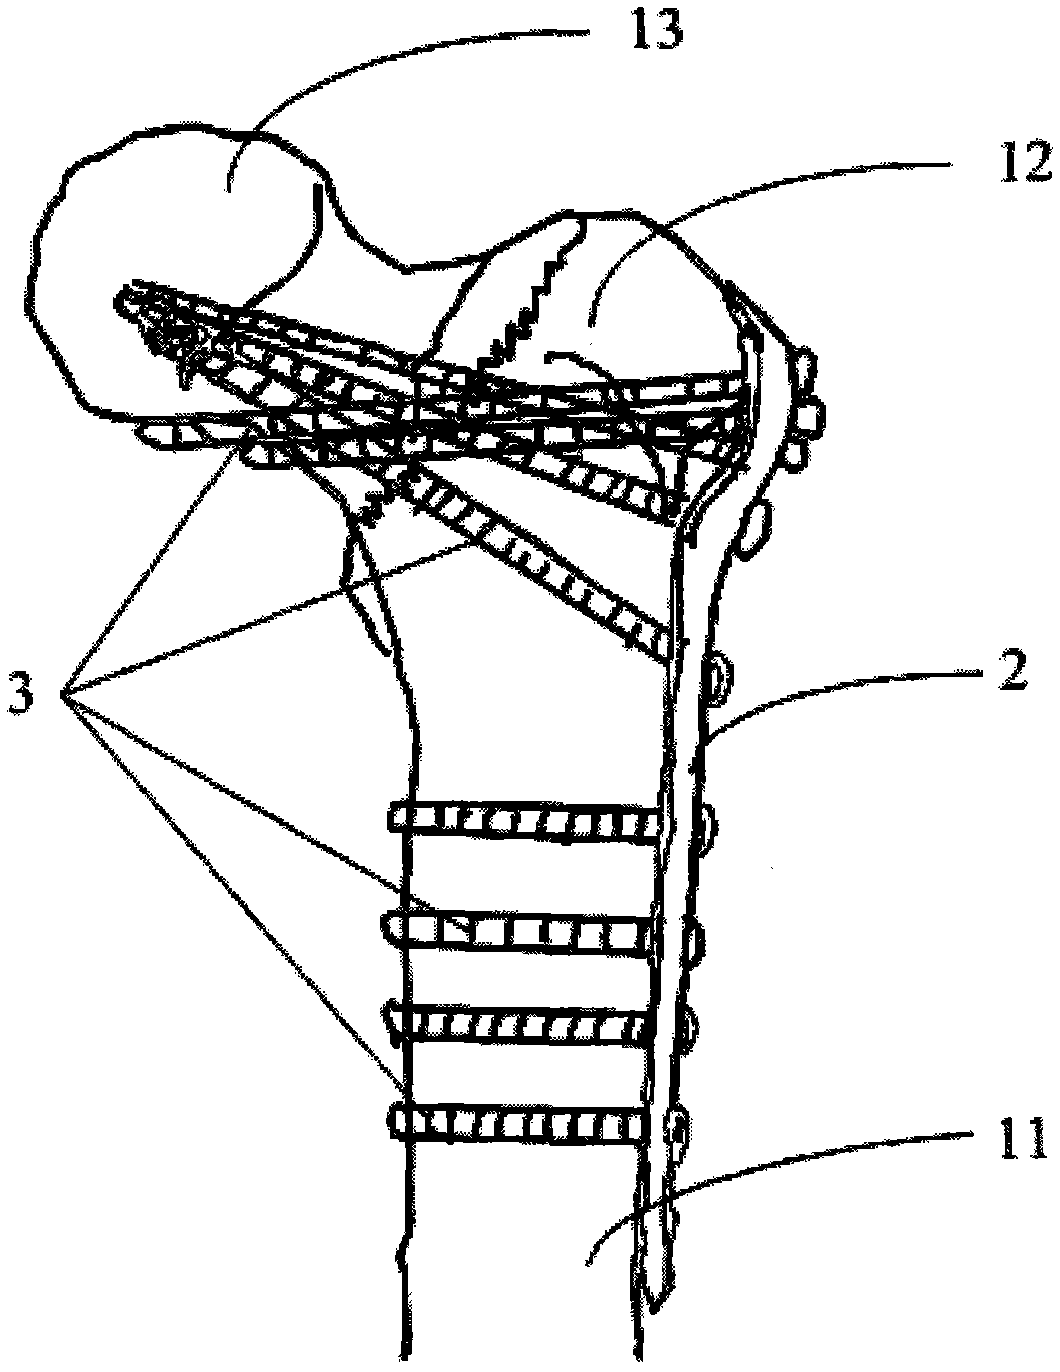 Proximal femoral anti-rotation locking device